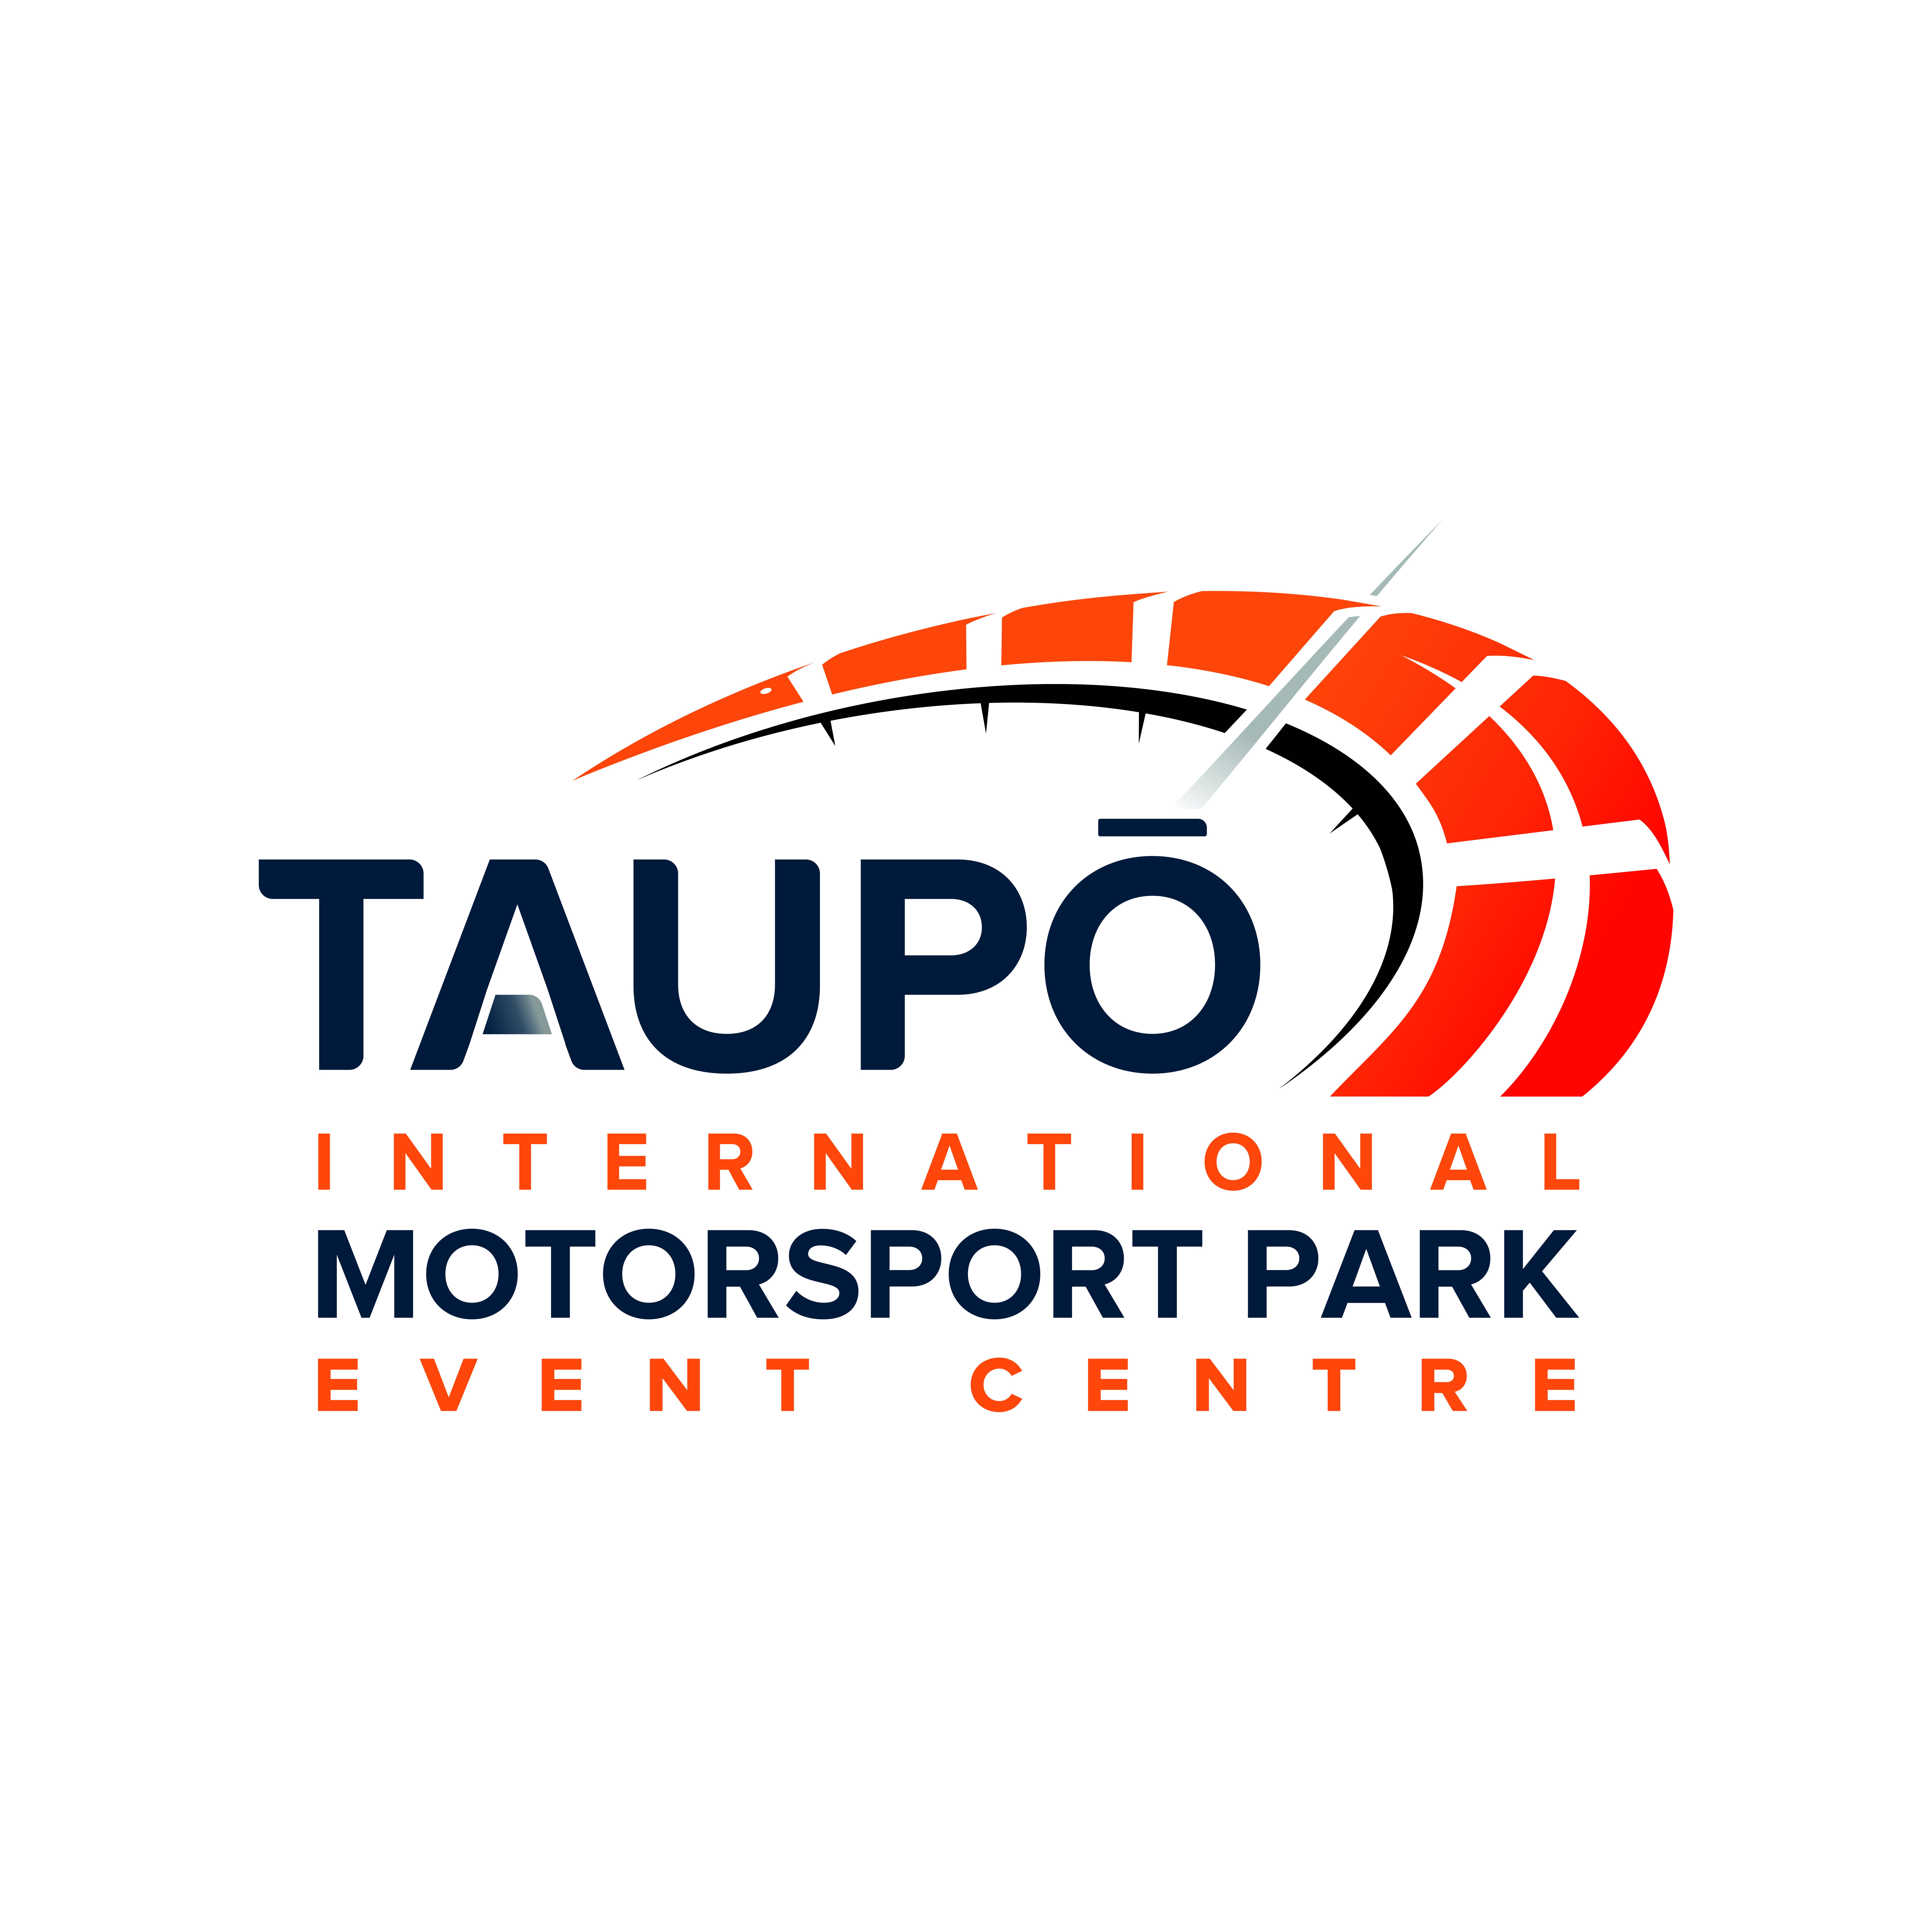 
Taupō International Motorsport Park and Events Centre